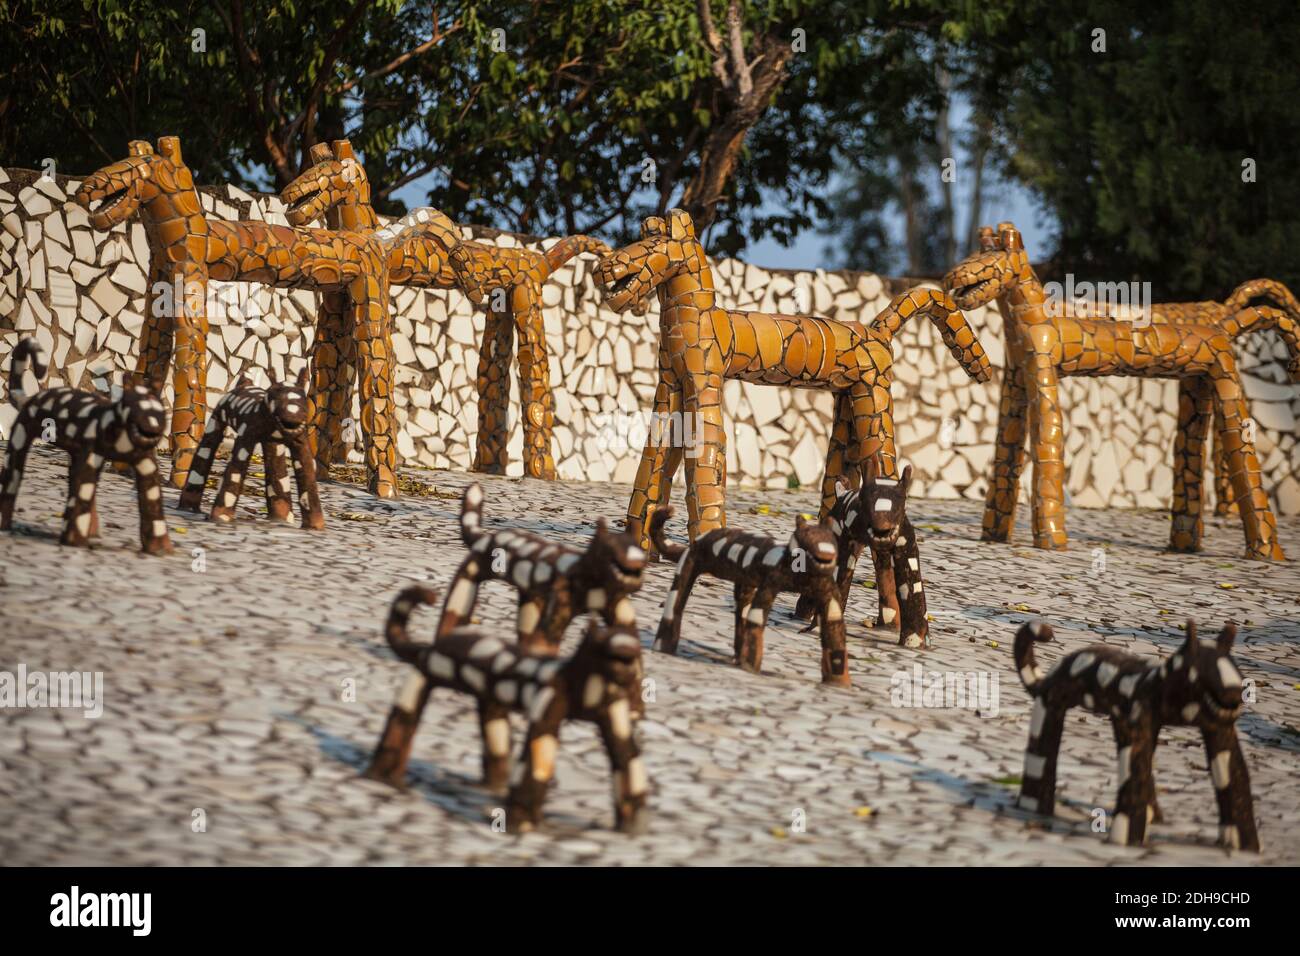 India, Haryana and Punjab, Chandigarh, Nek Chandi's Rock Garden, Animal sculptures made from recycled materials Stock Photo